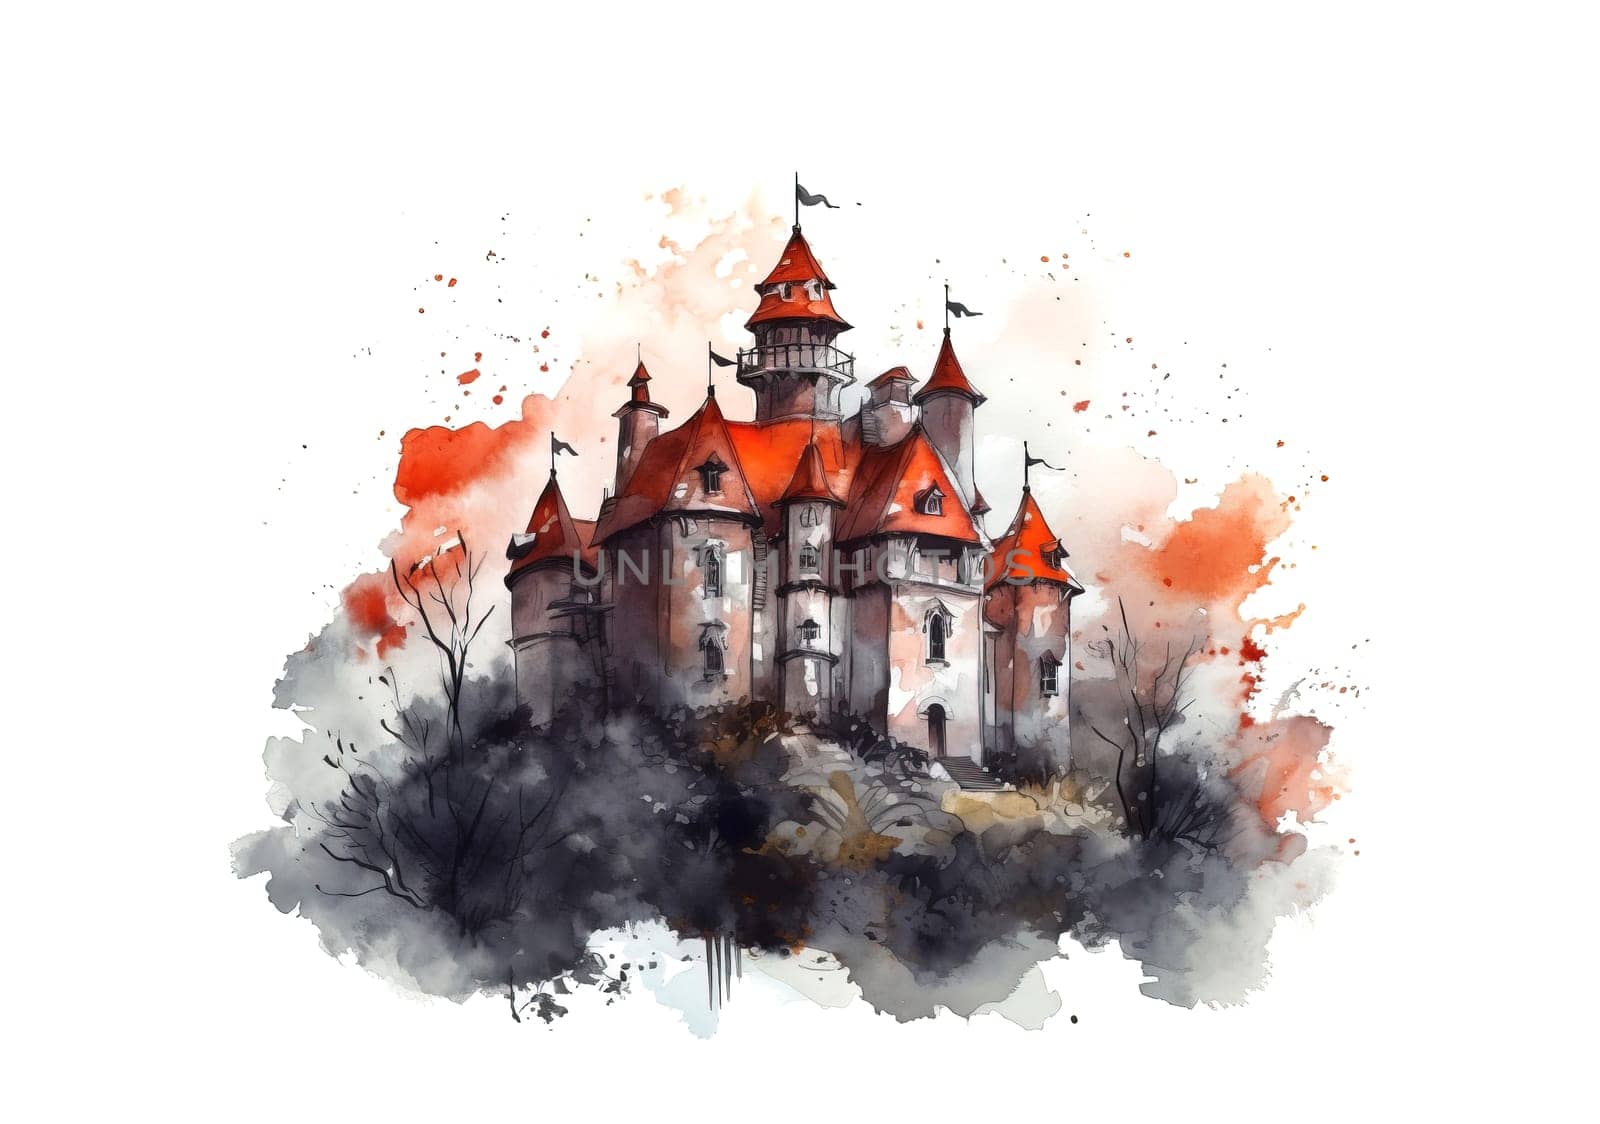 magical fabulous Castle from storytale by GekaSkr